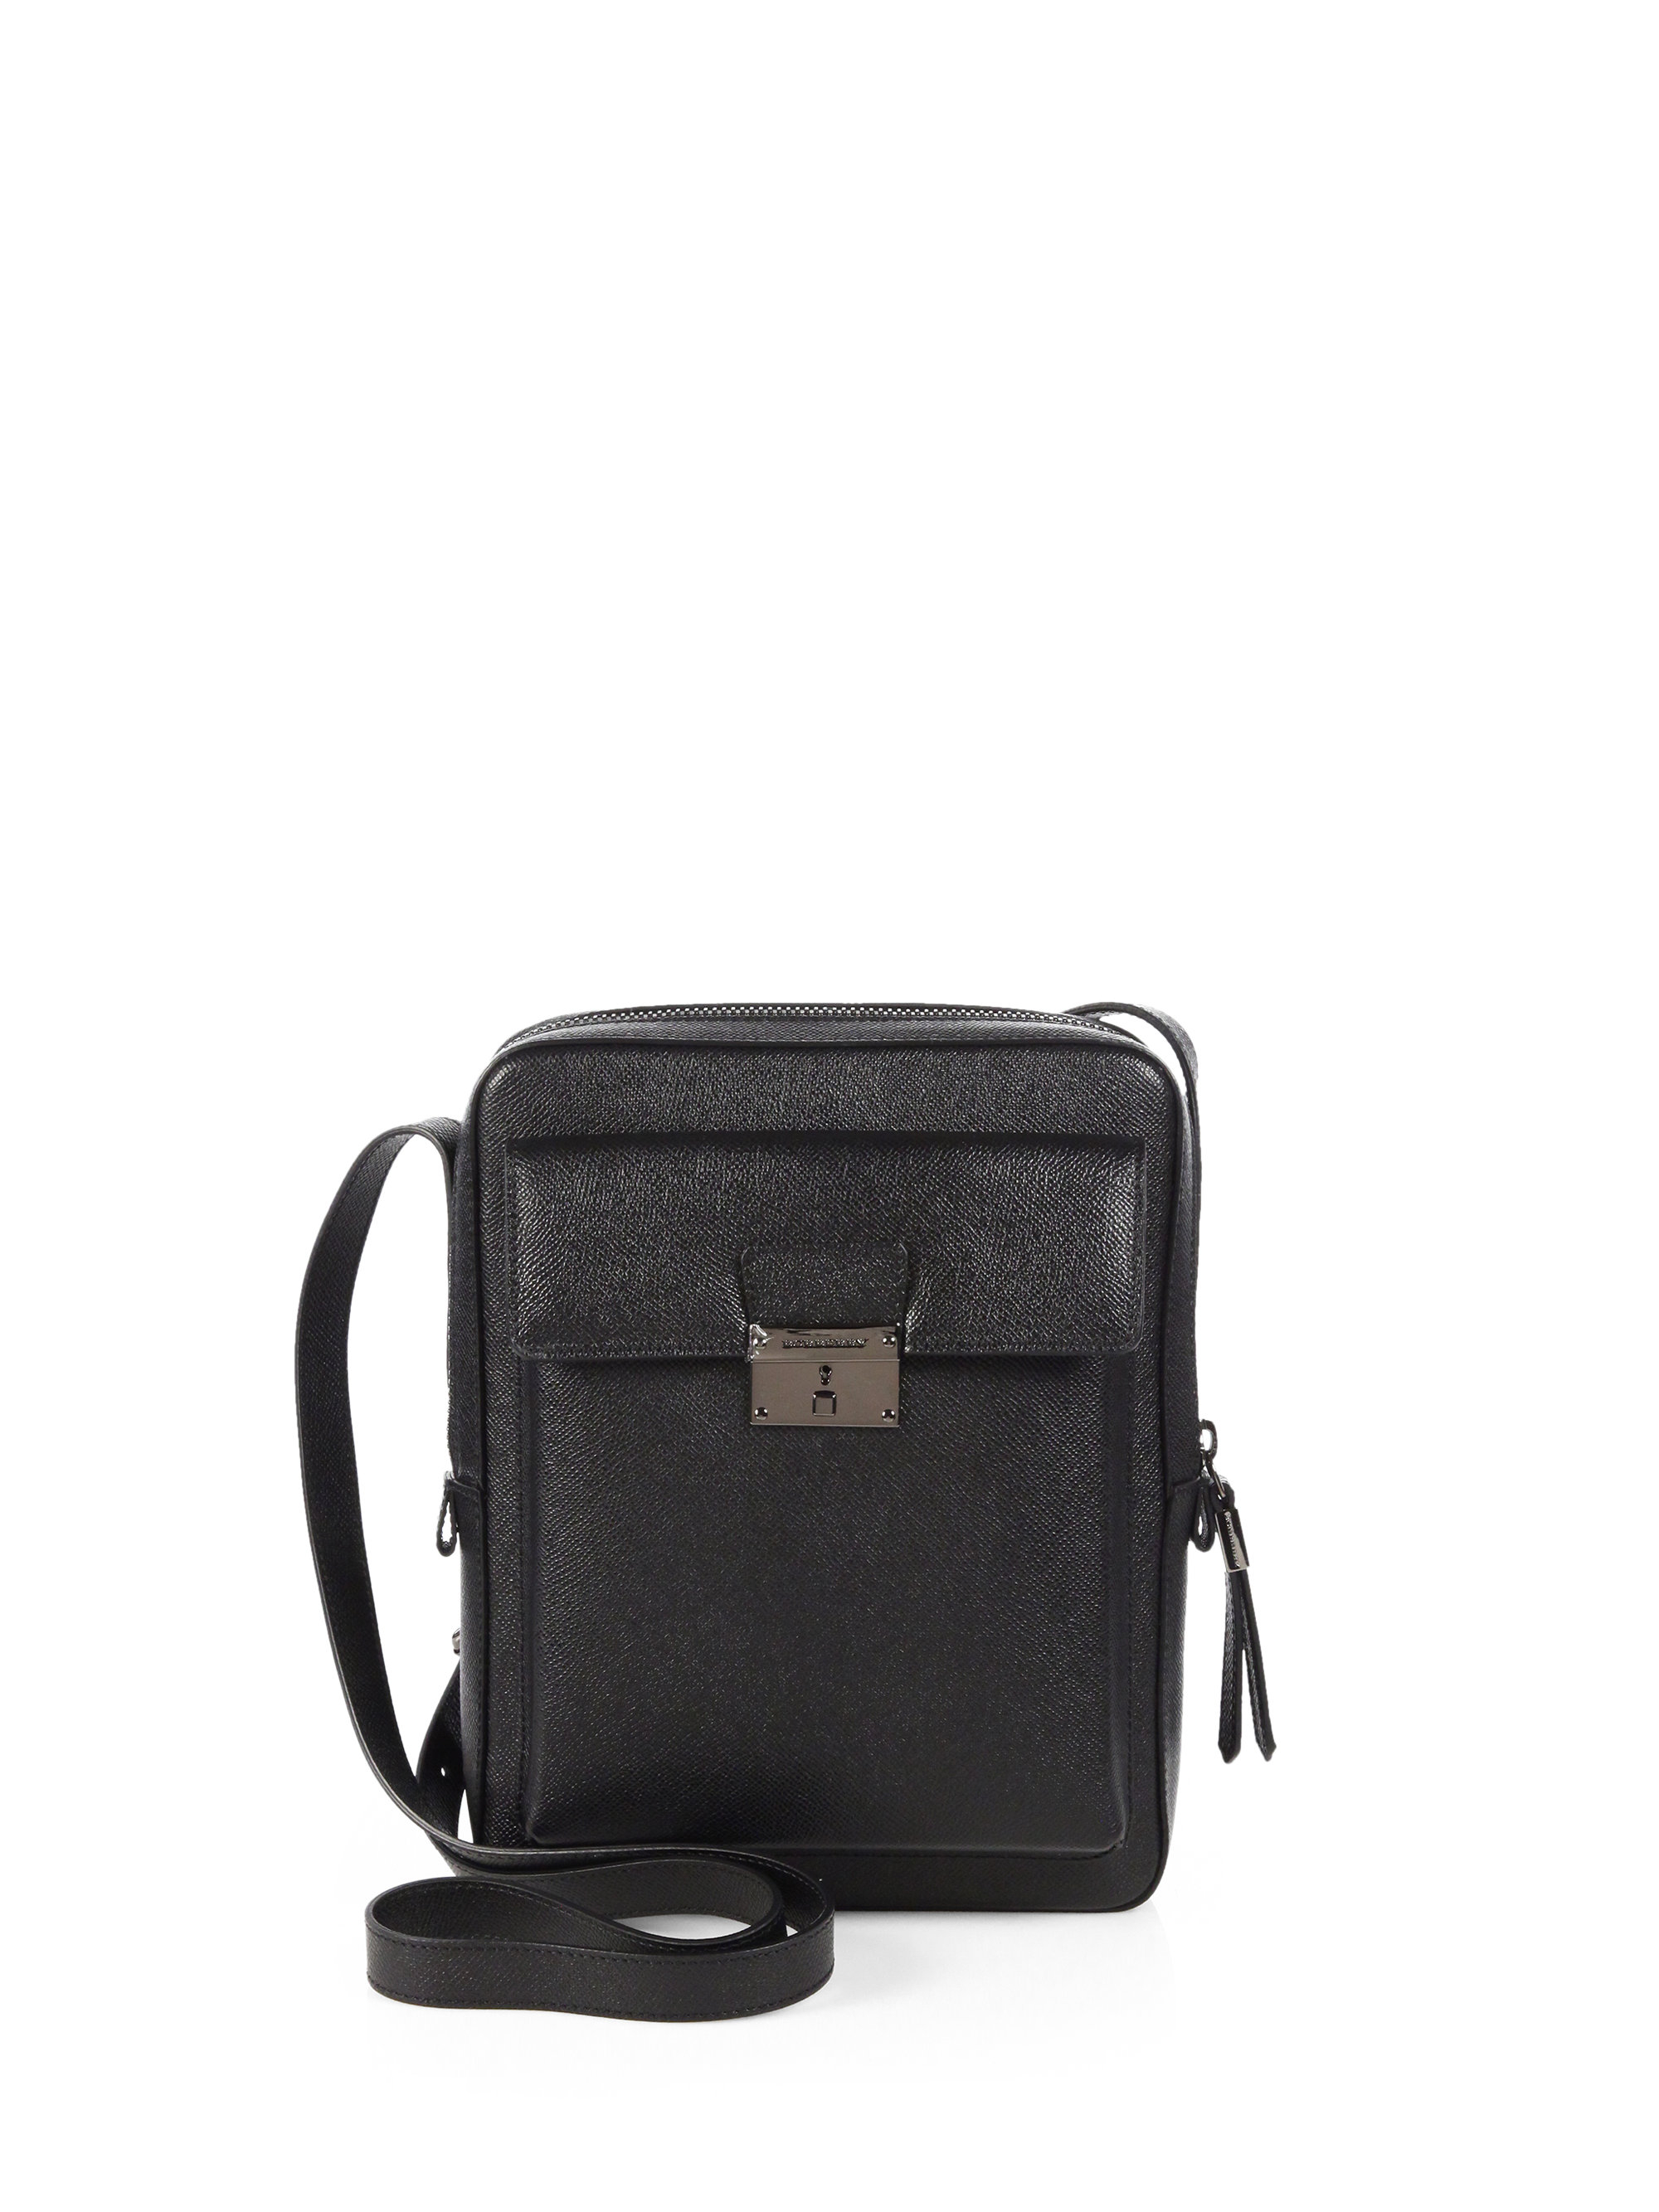 Lyst - Burberry Leather Crossbody Camera Bag in Black